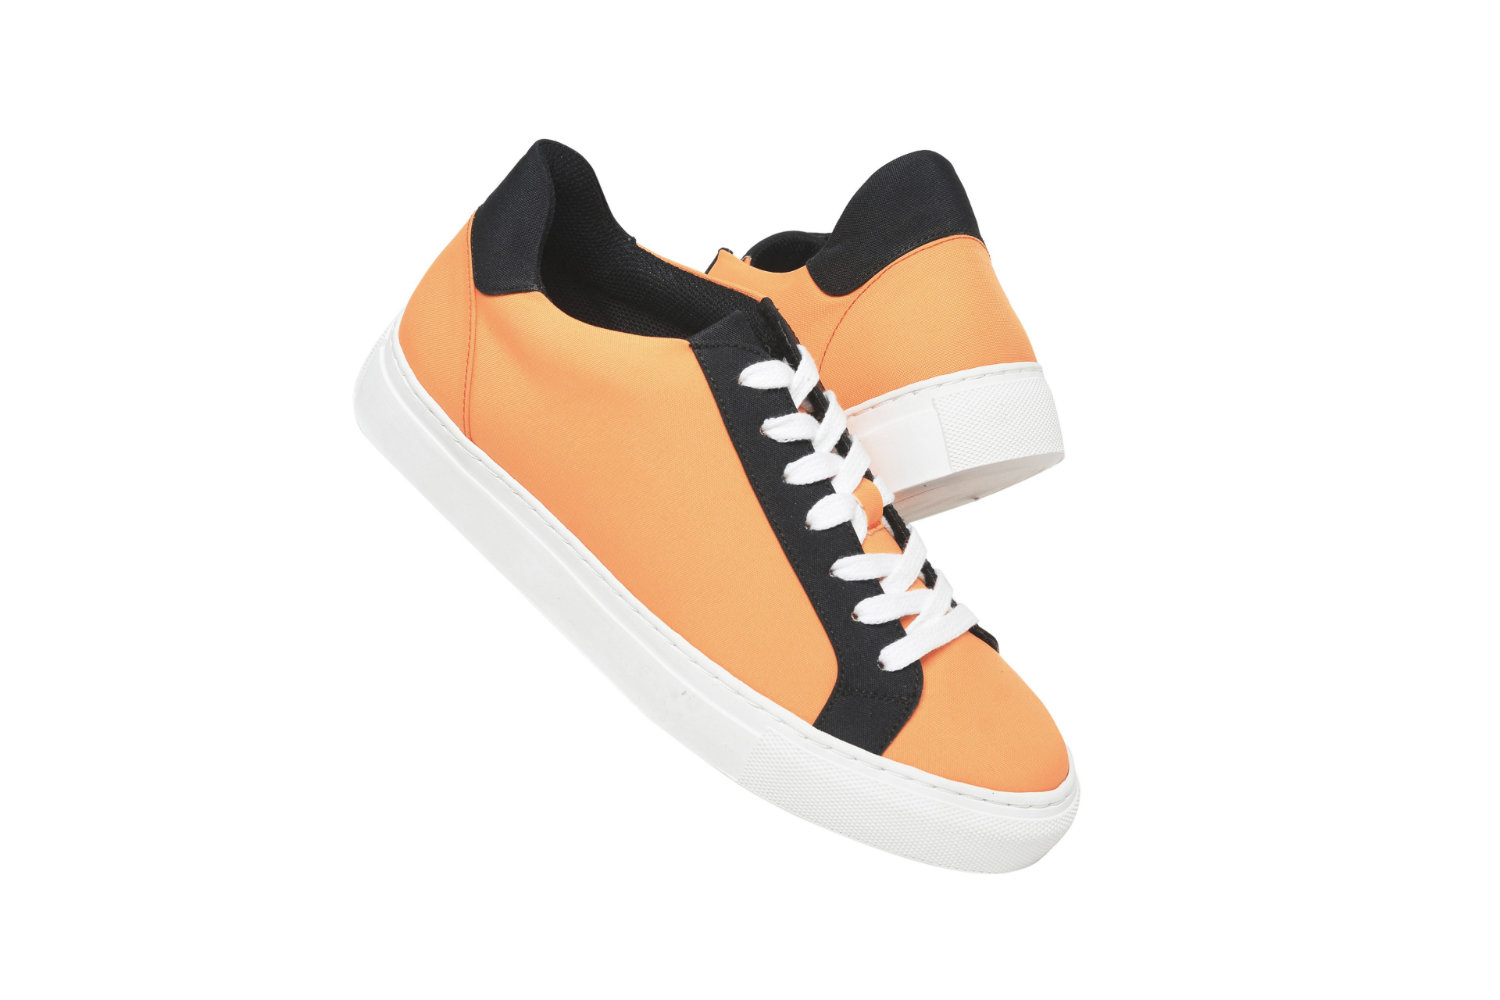 Sneaker Nimber Ocean aus recyceltem Material in schwarz-orange Werbeartikel für Firmen